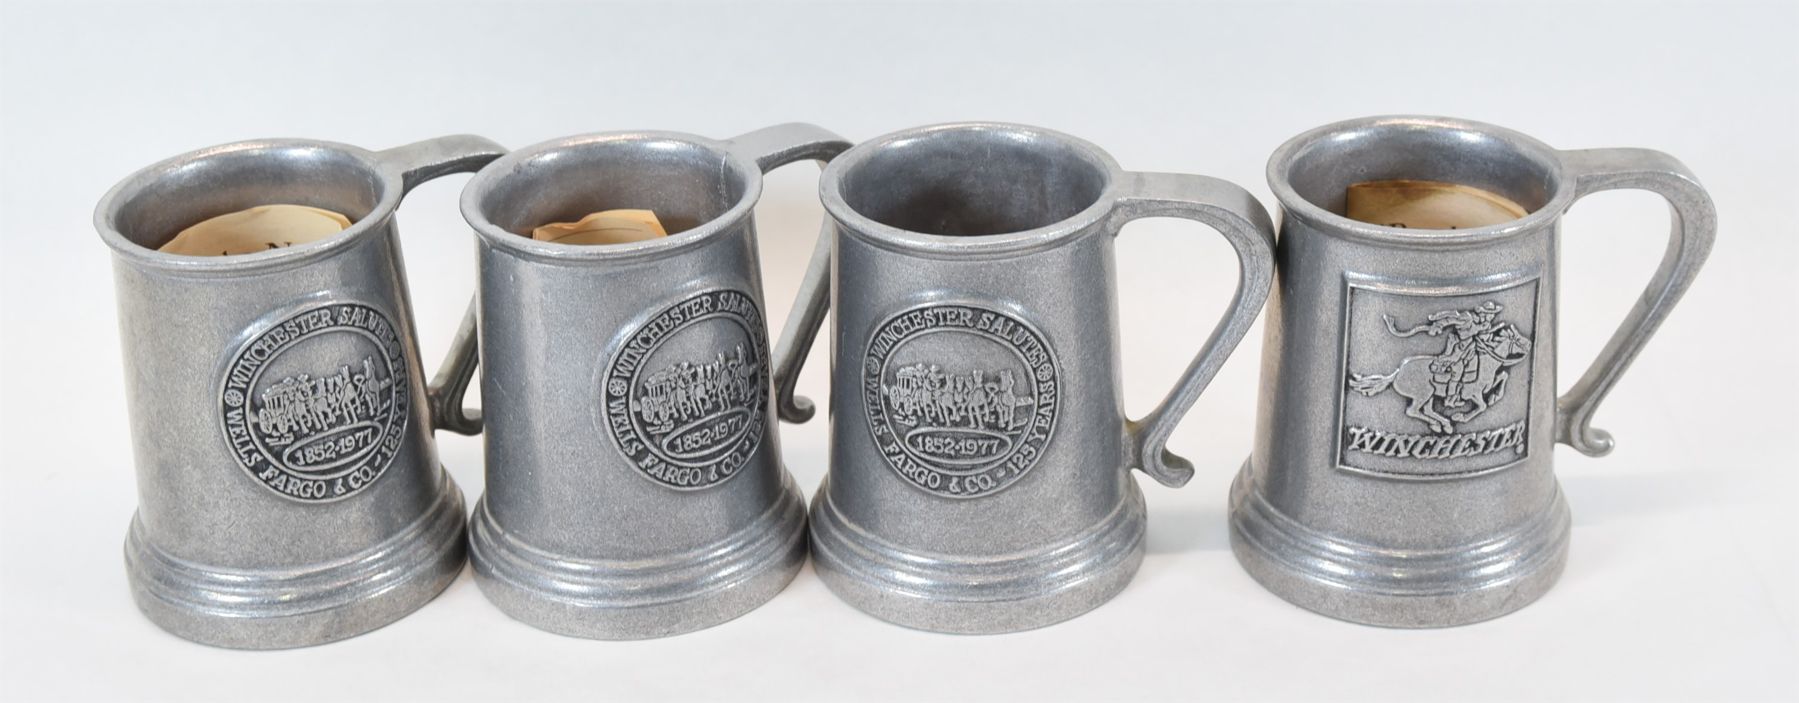 Winchester Salutes Wells Fargo 1852-1977 Commemorative Beer Mug Set